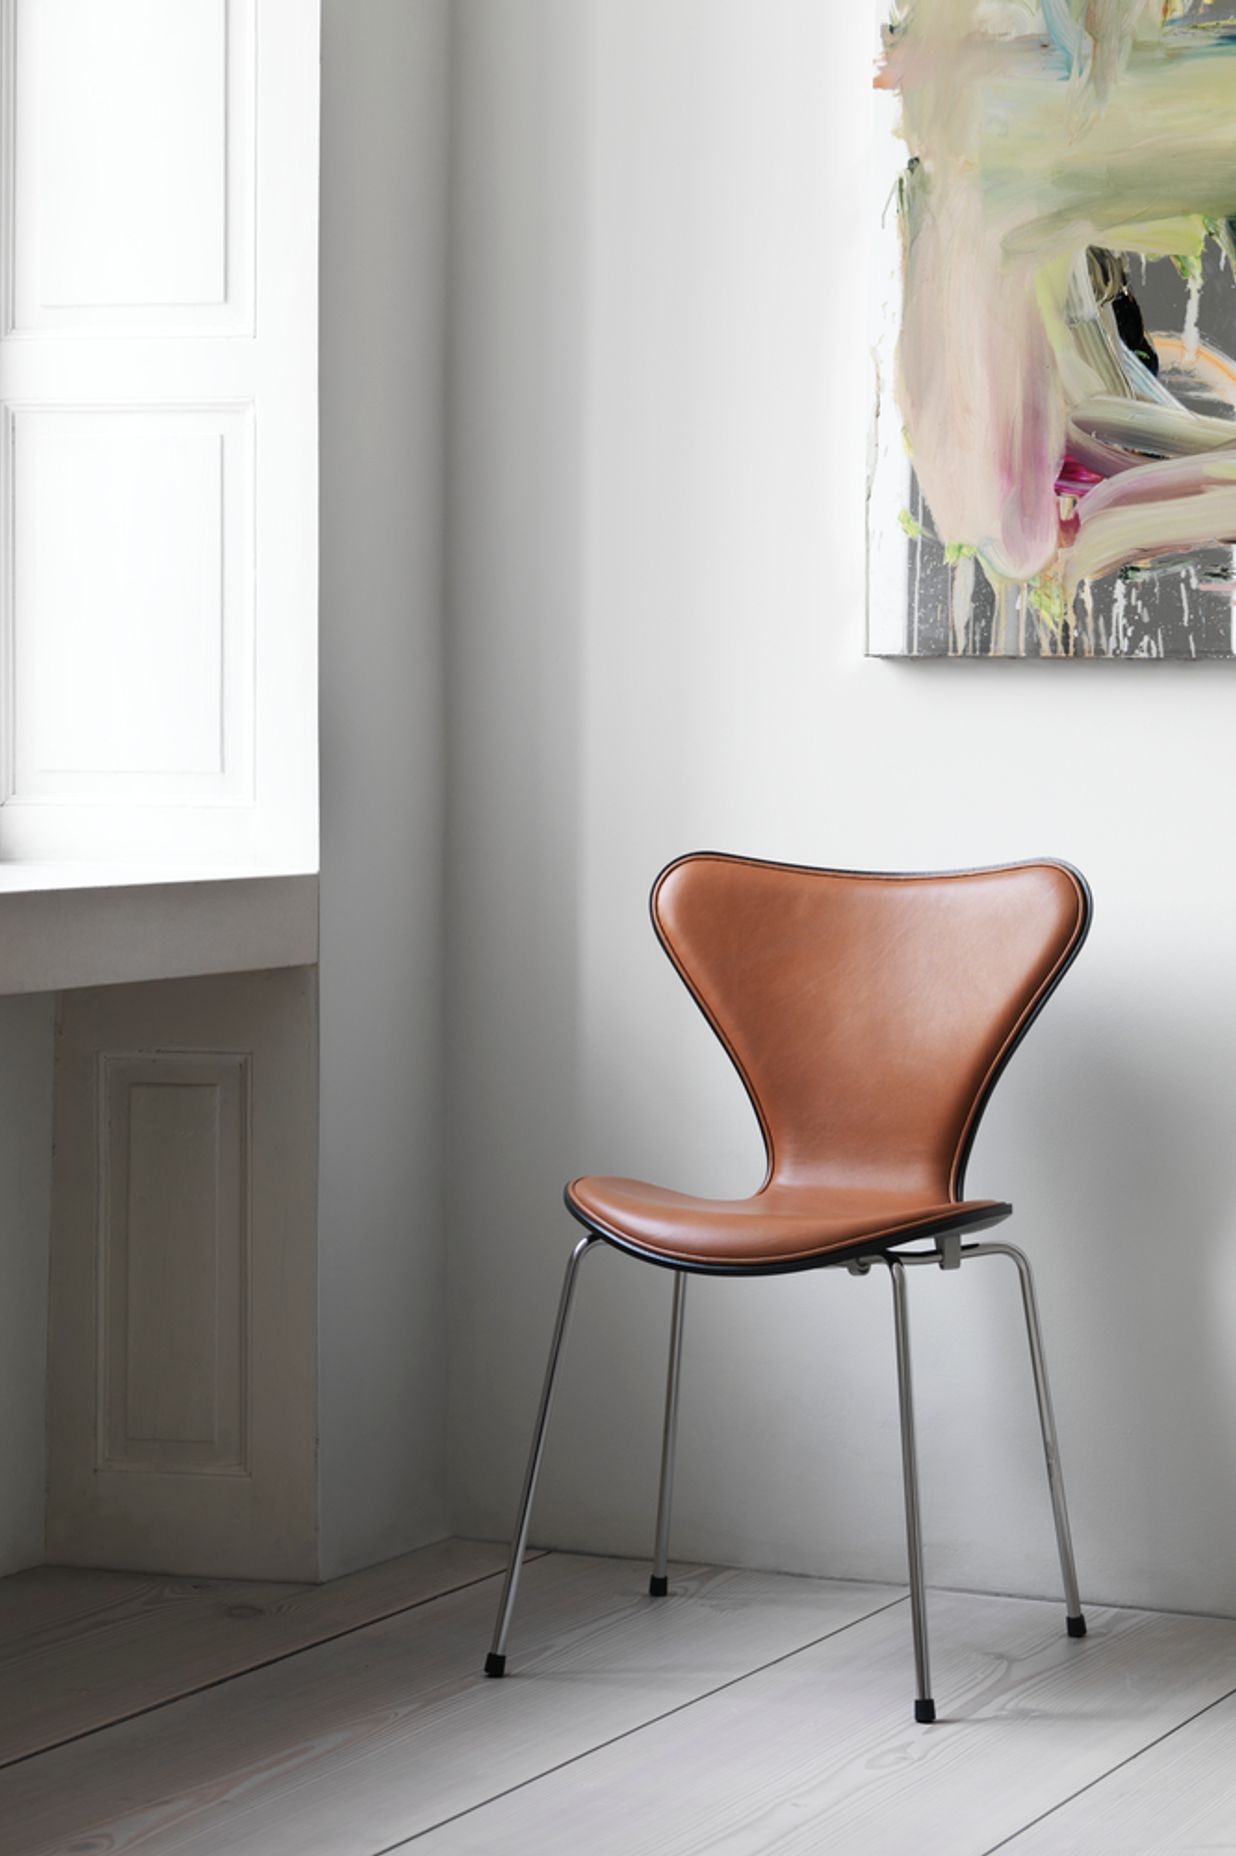 Fritz Hansen ‘3107 Chair’ by Arne Jacobsen